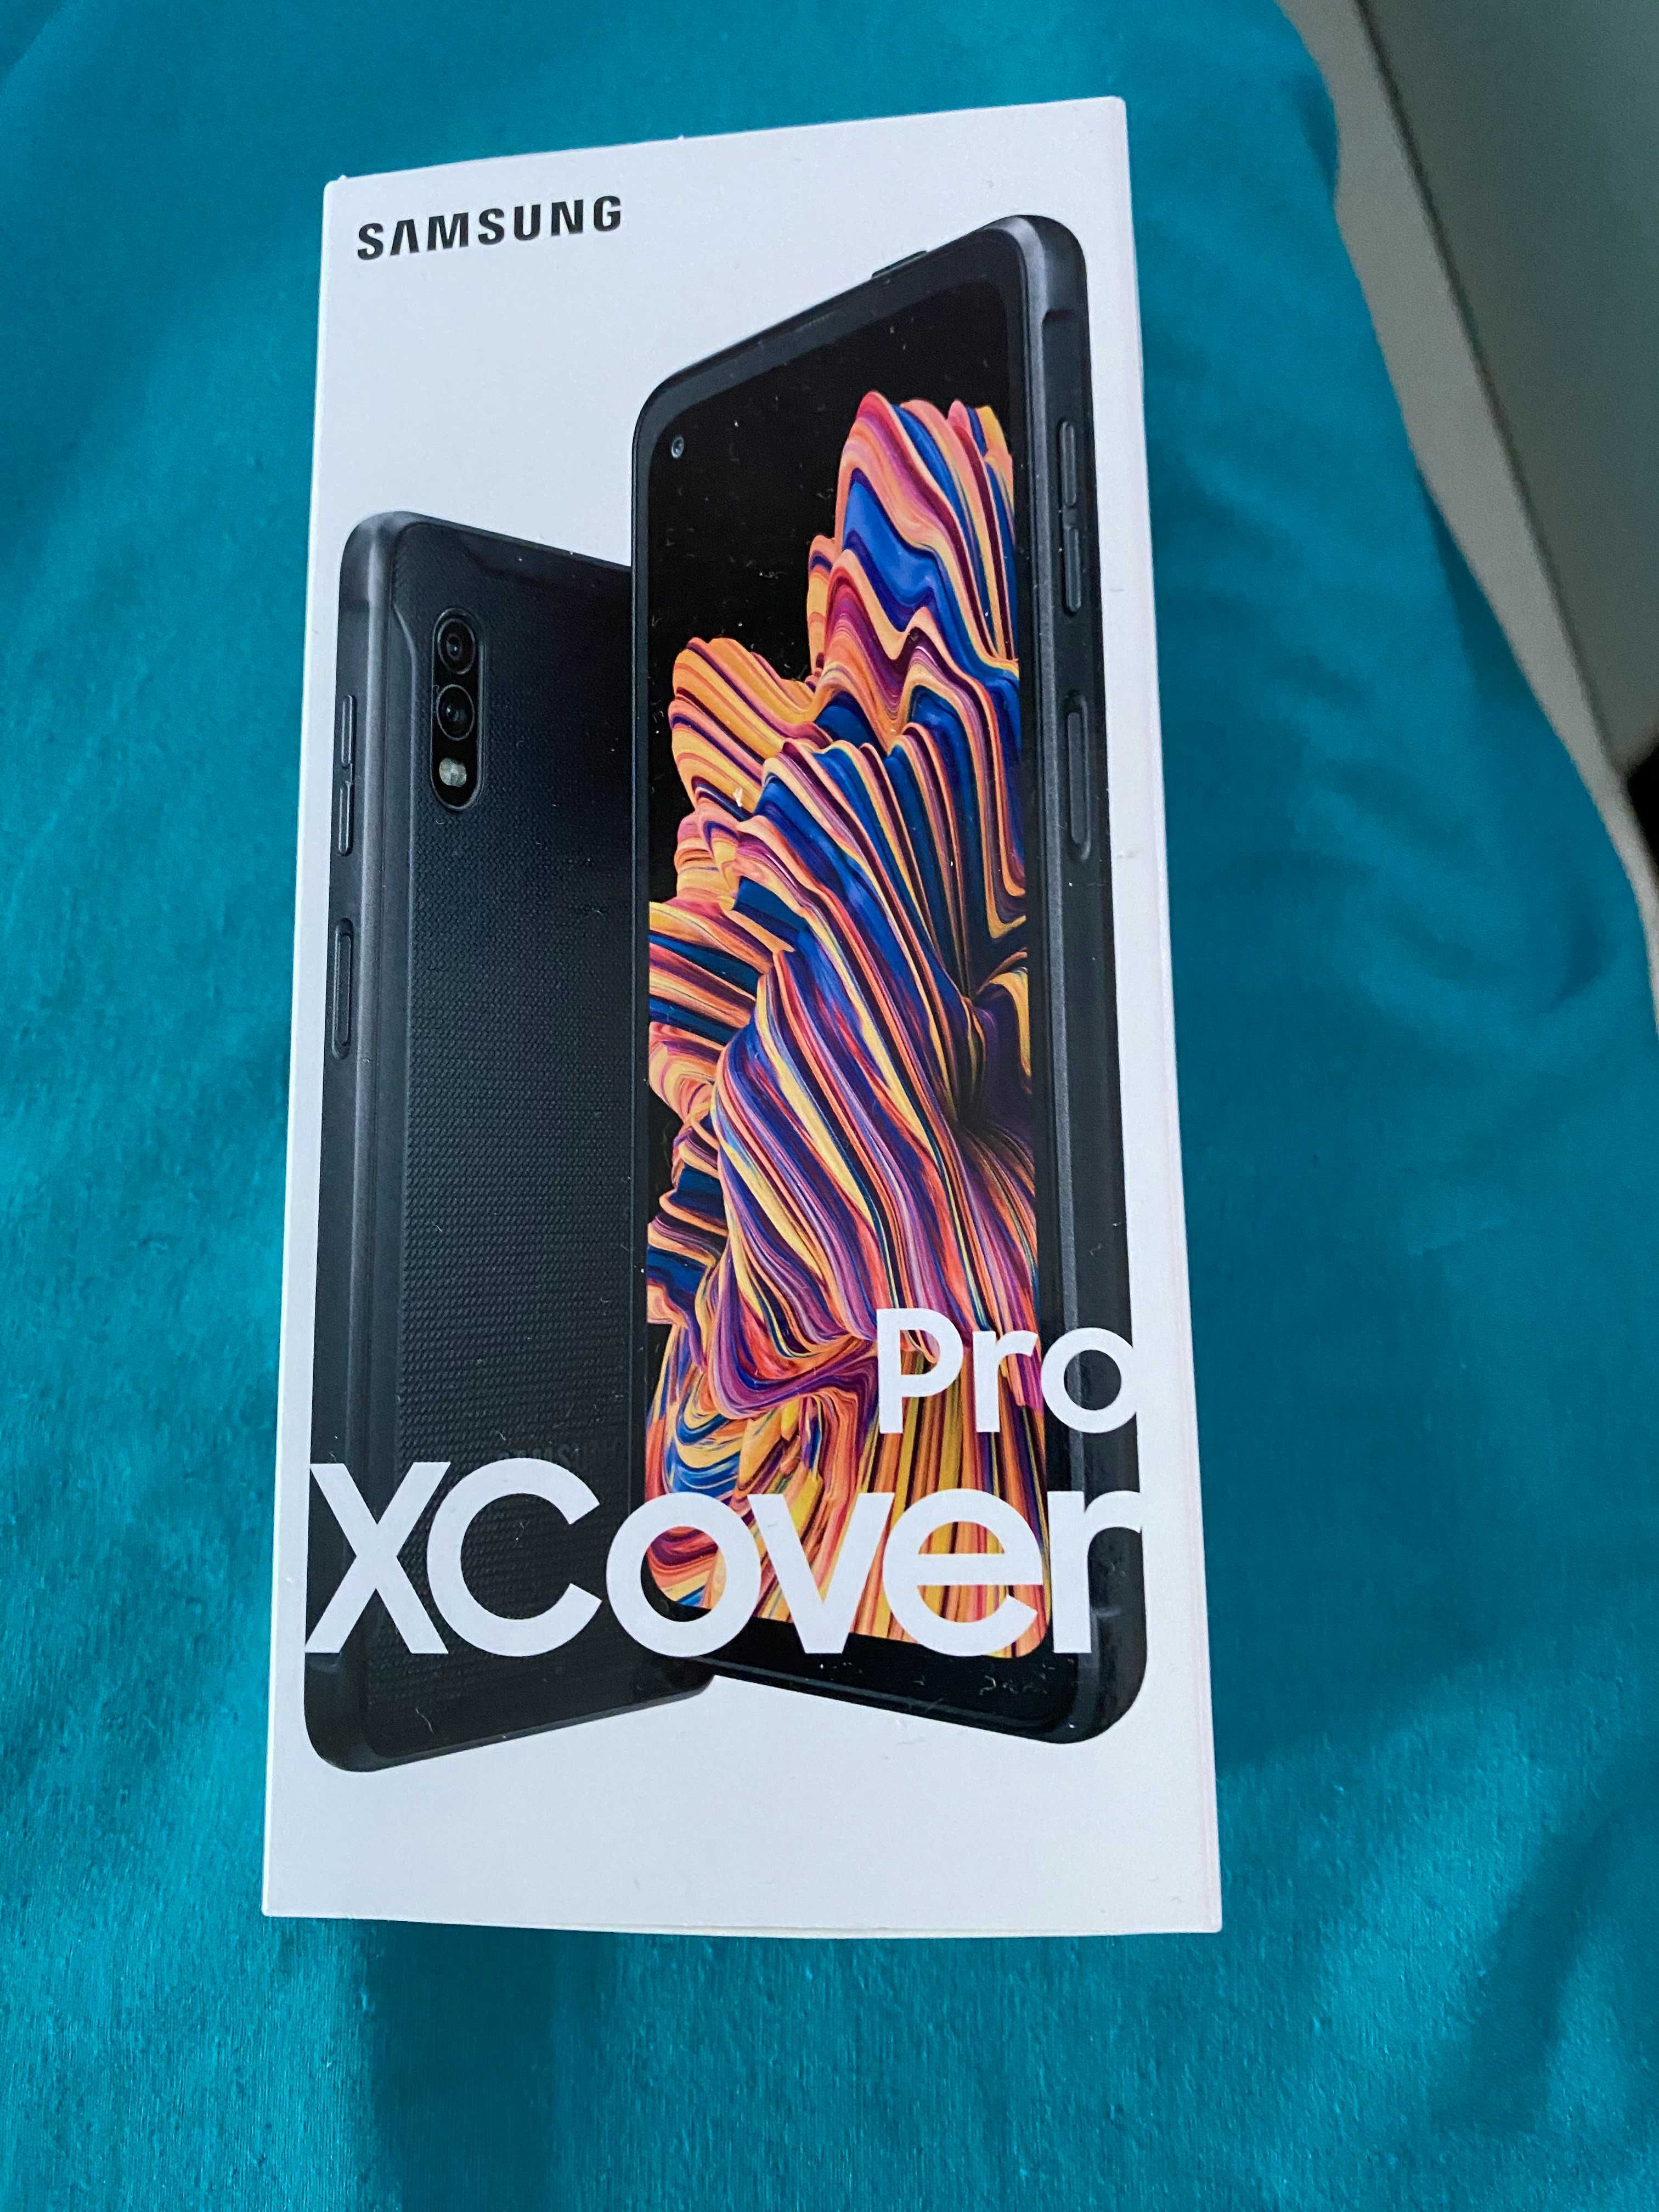 Galaxy XCover Pro